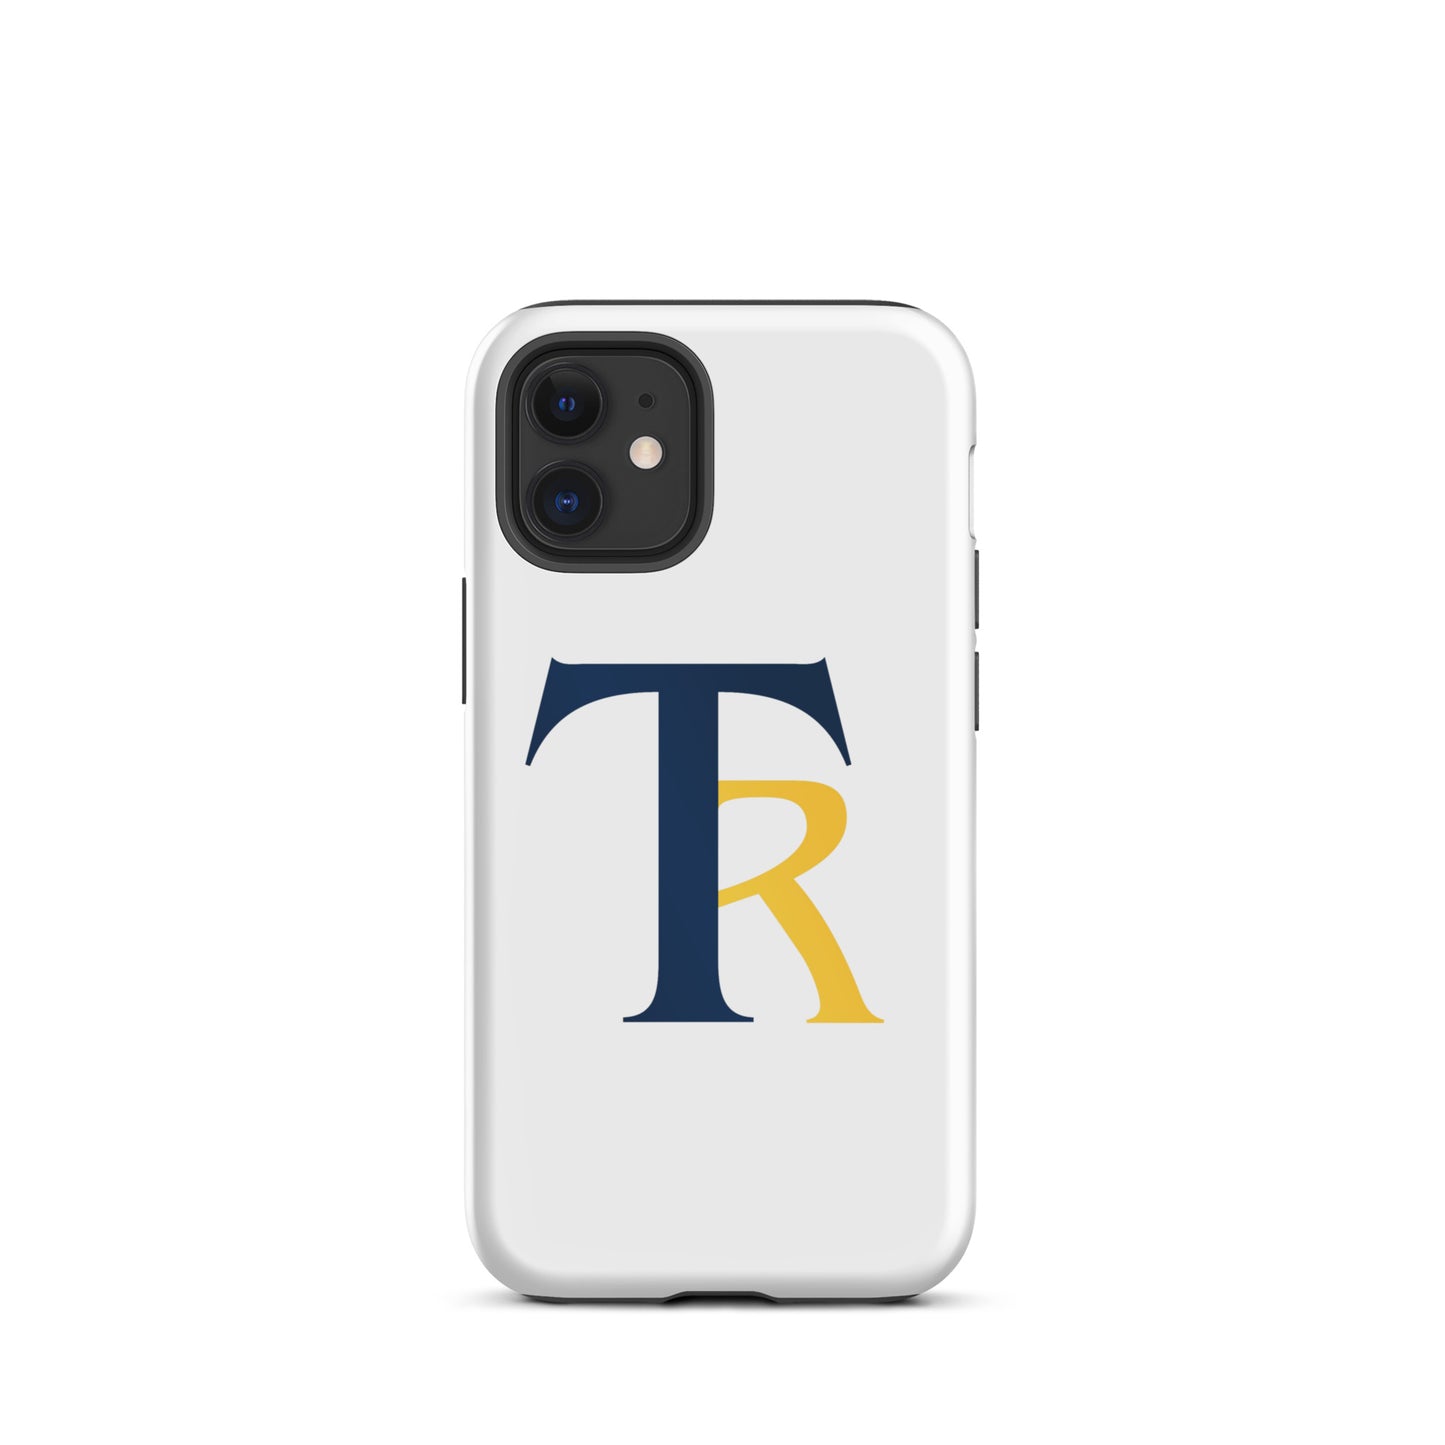 TR Tough iPhone case